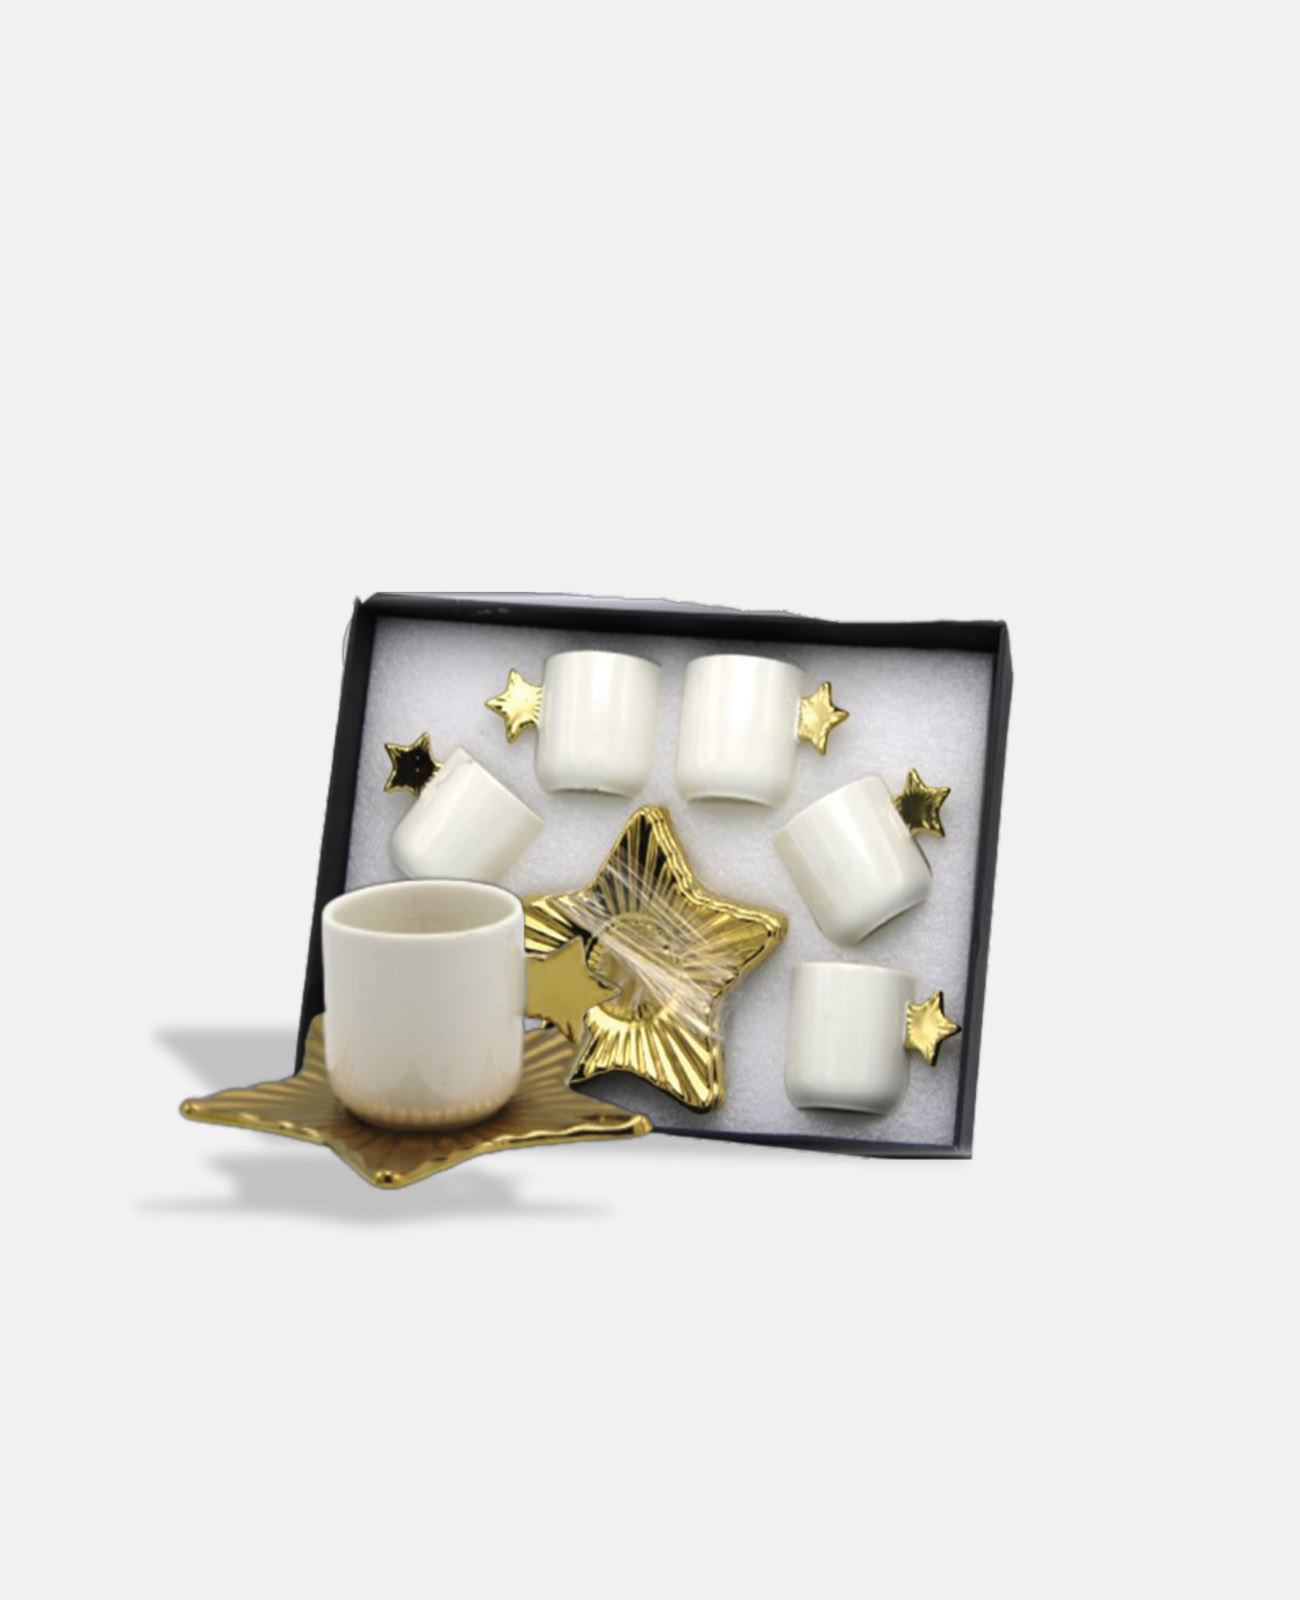 Golden Star Designed Porcelain Coffee Cups Set - 6 Pieces/H 2-55